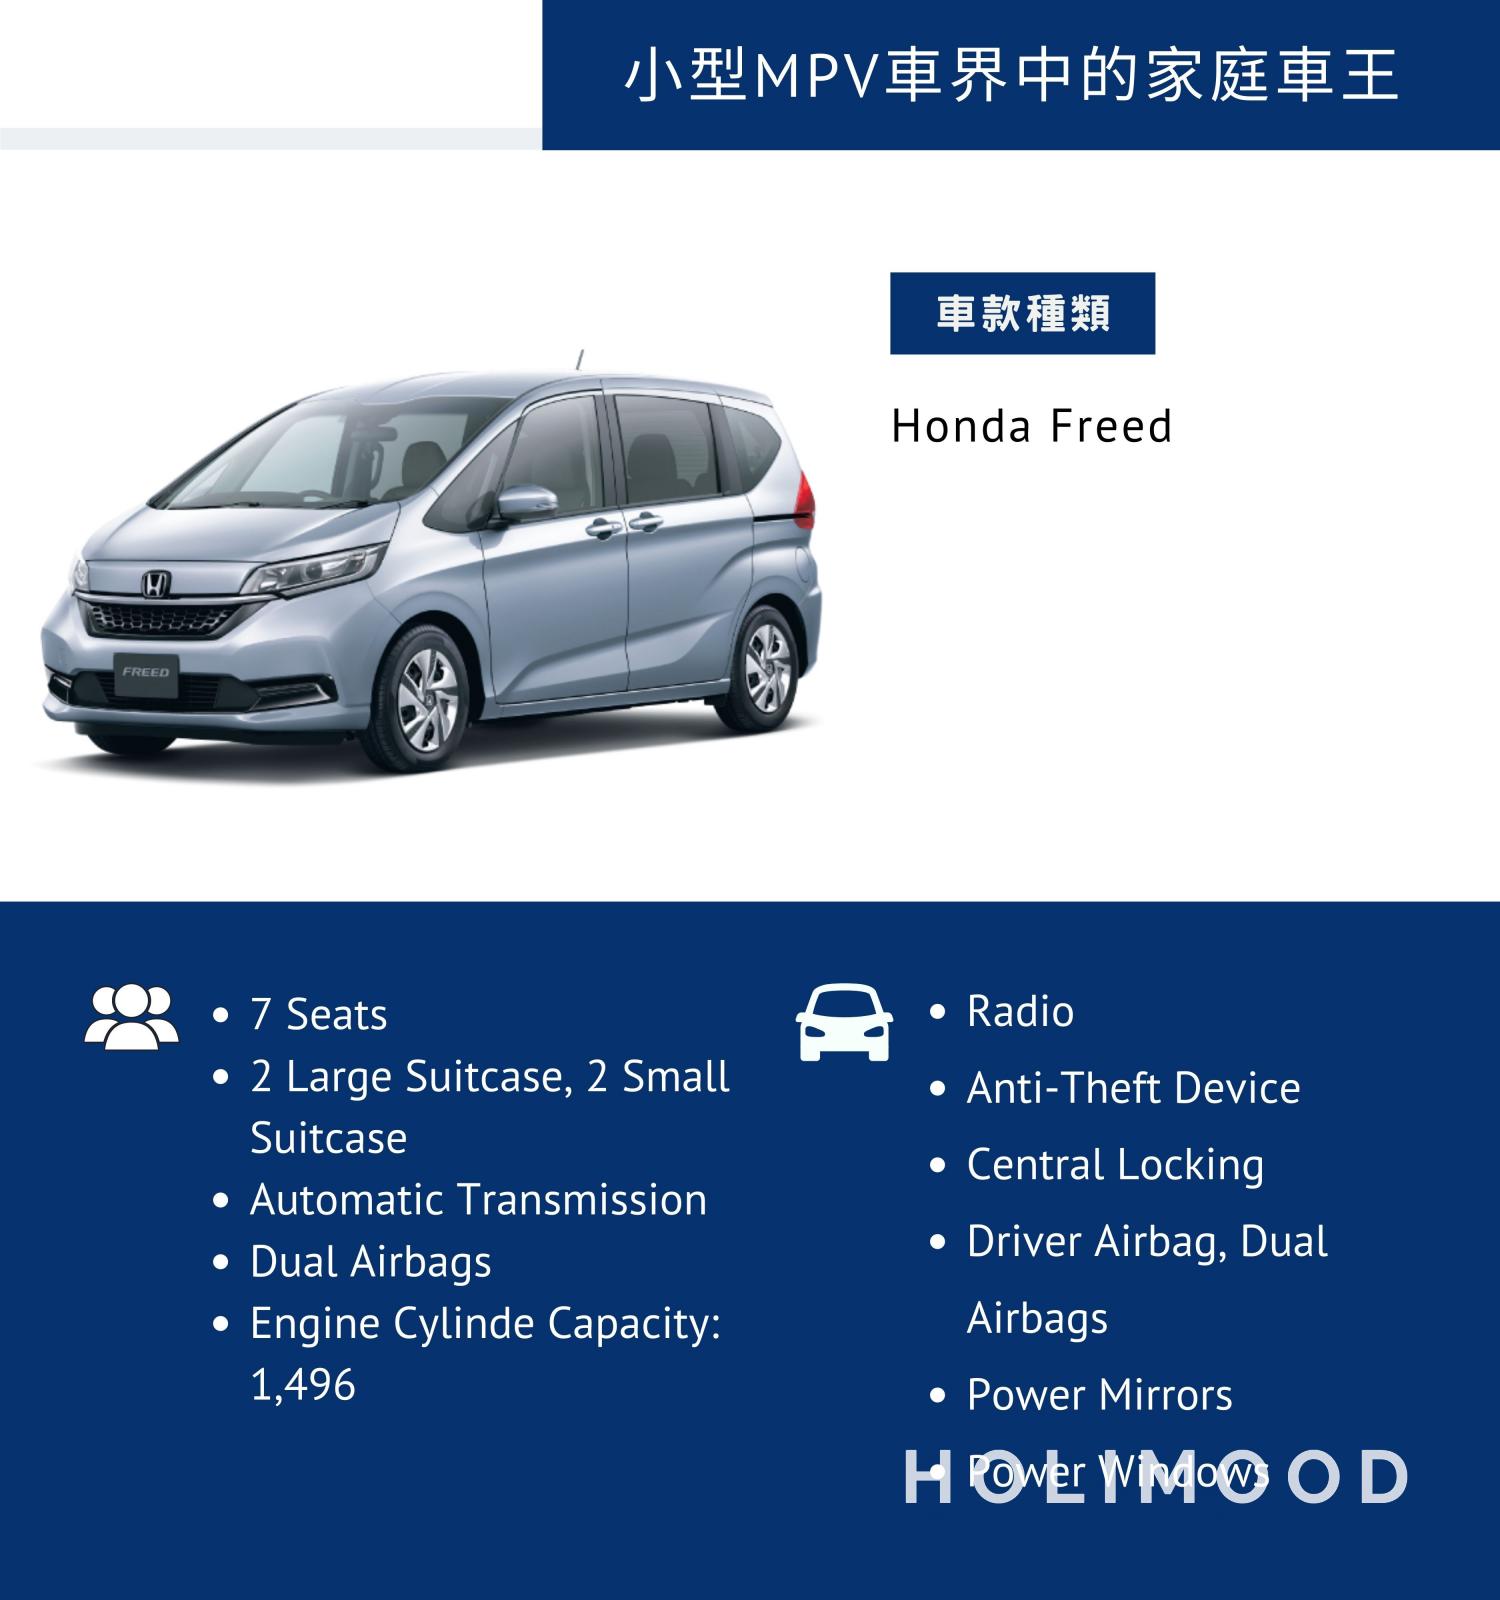 DCH Mobility Car Rent x Holimood Promotion 【熱門家庭車之選】【五年內新車】Honda Freed - 實用便利7人車 (月租) 2